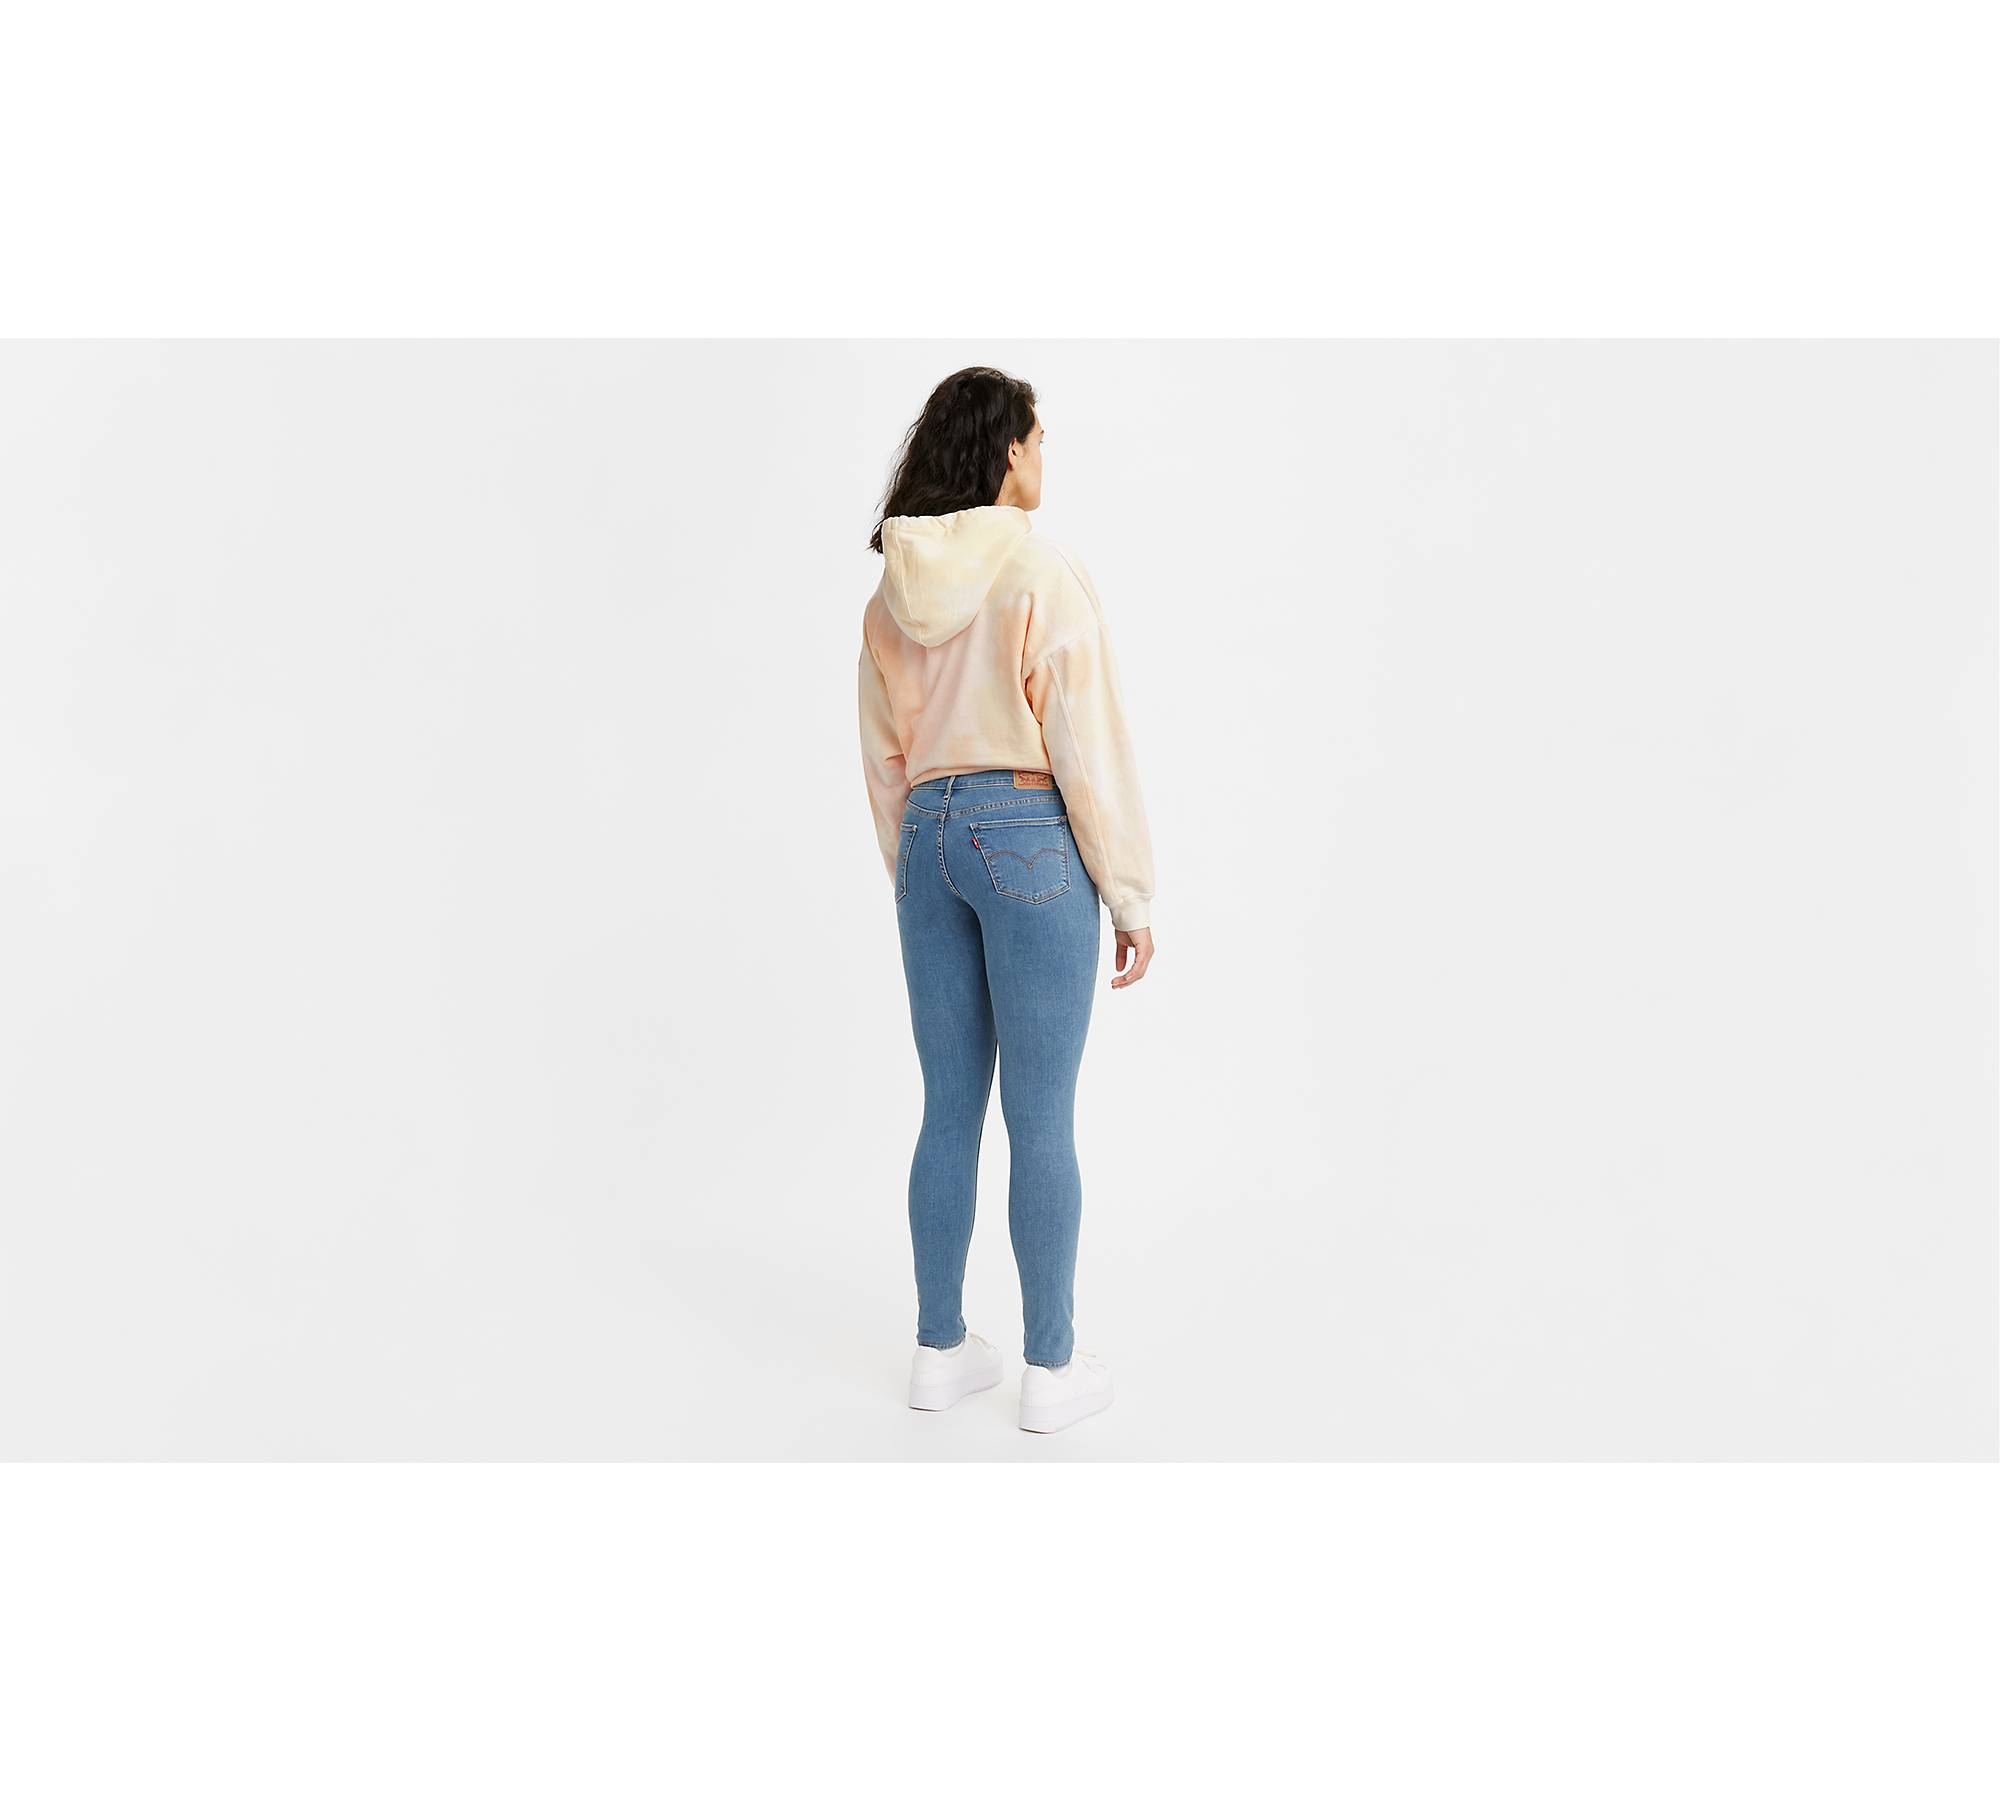 Levis Womens 710 Super Skinny Sateen Jeans, Choose Sz/Color: 30/Nebulas  Blue Sateen